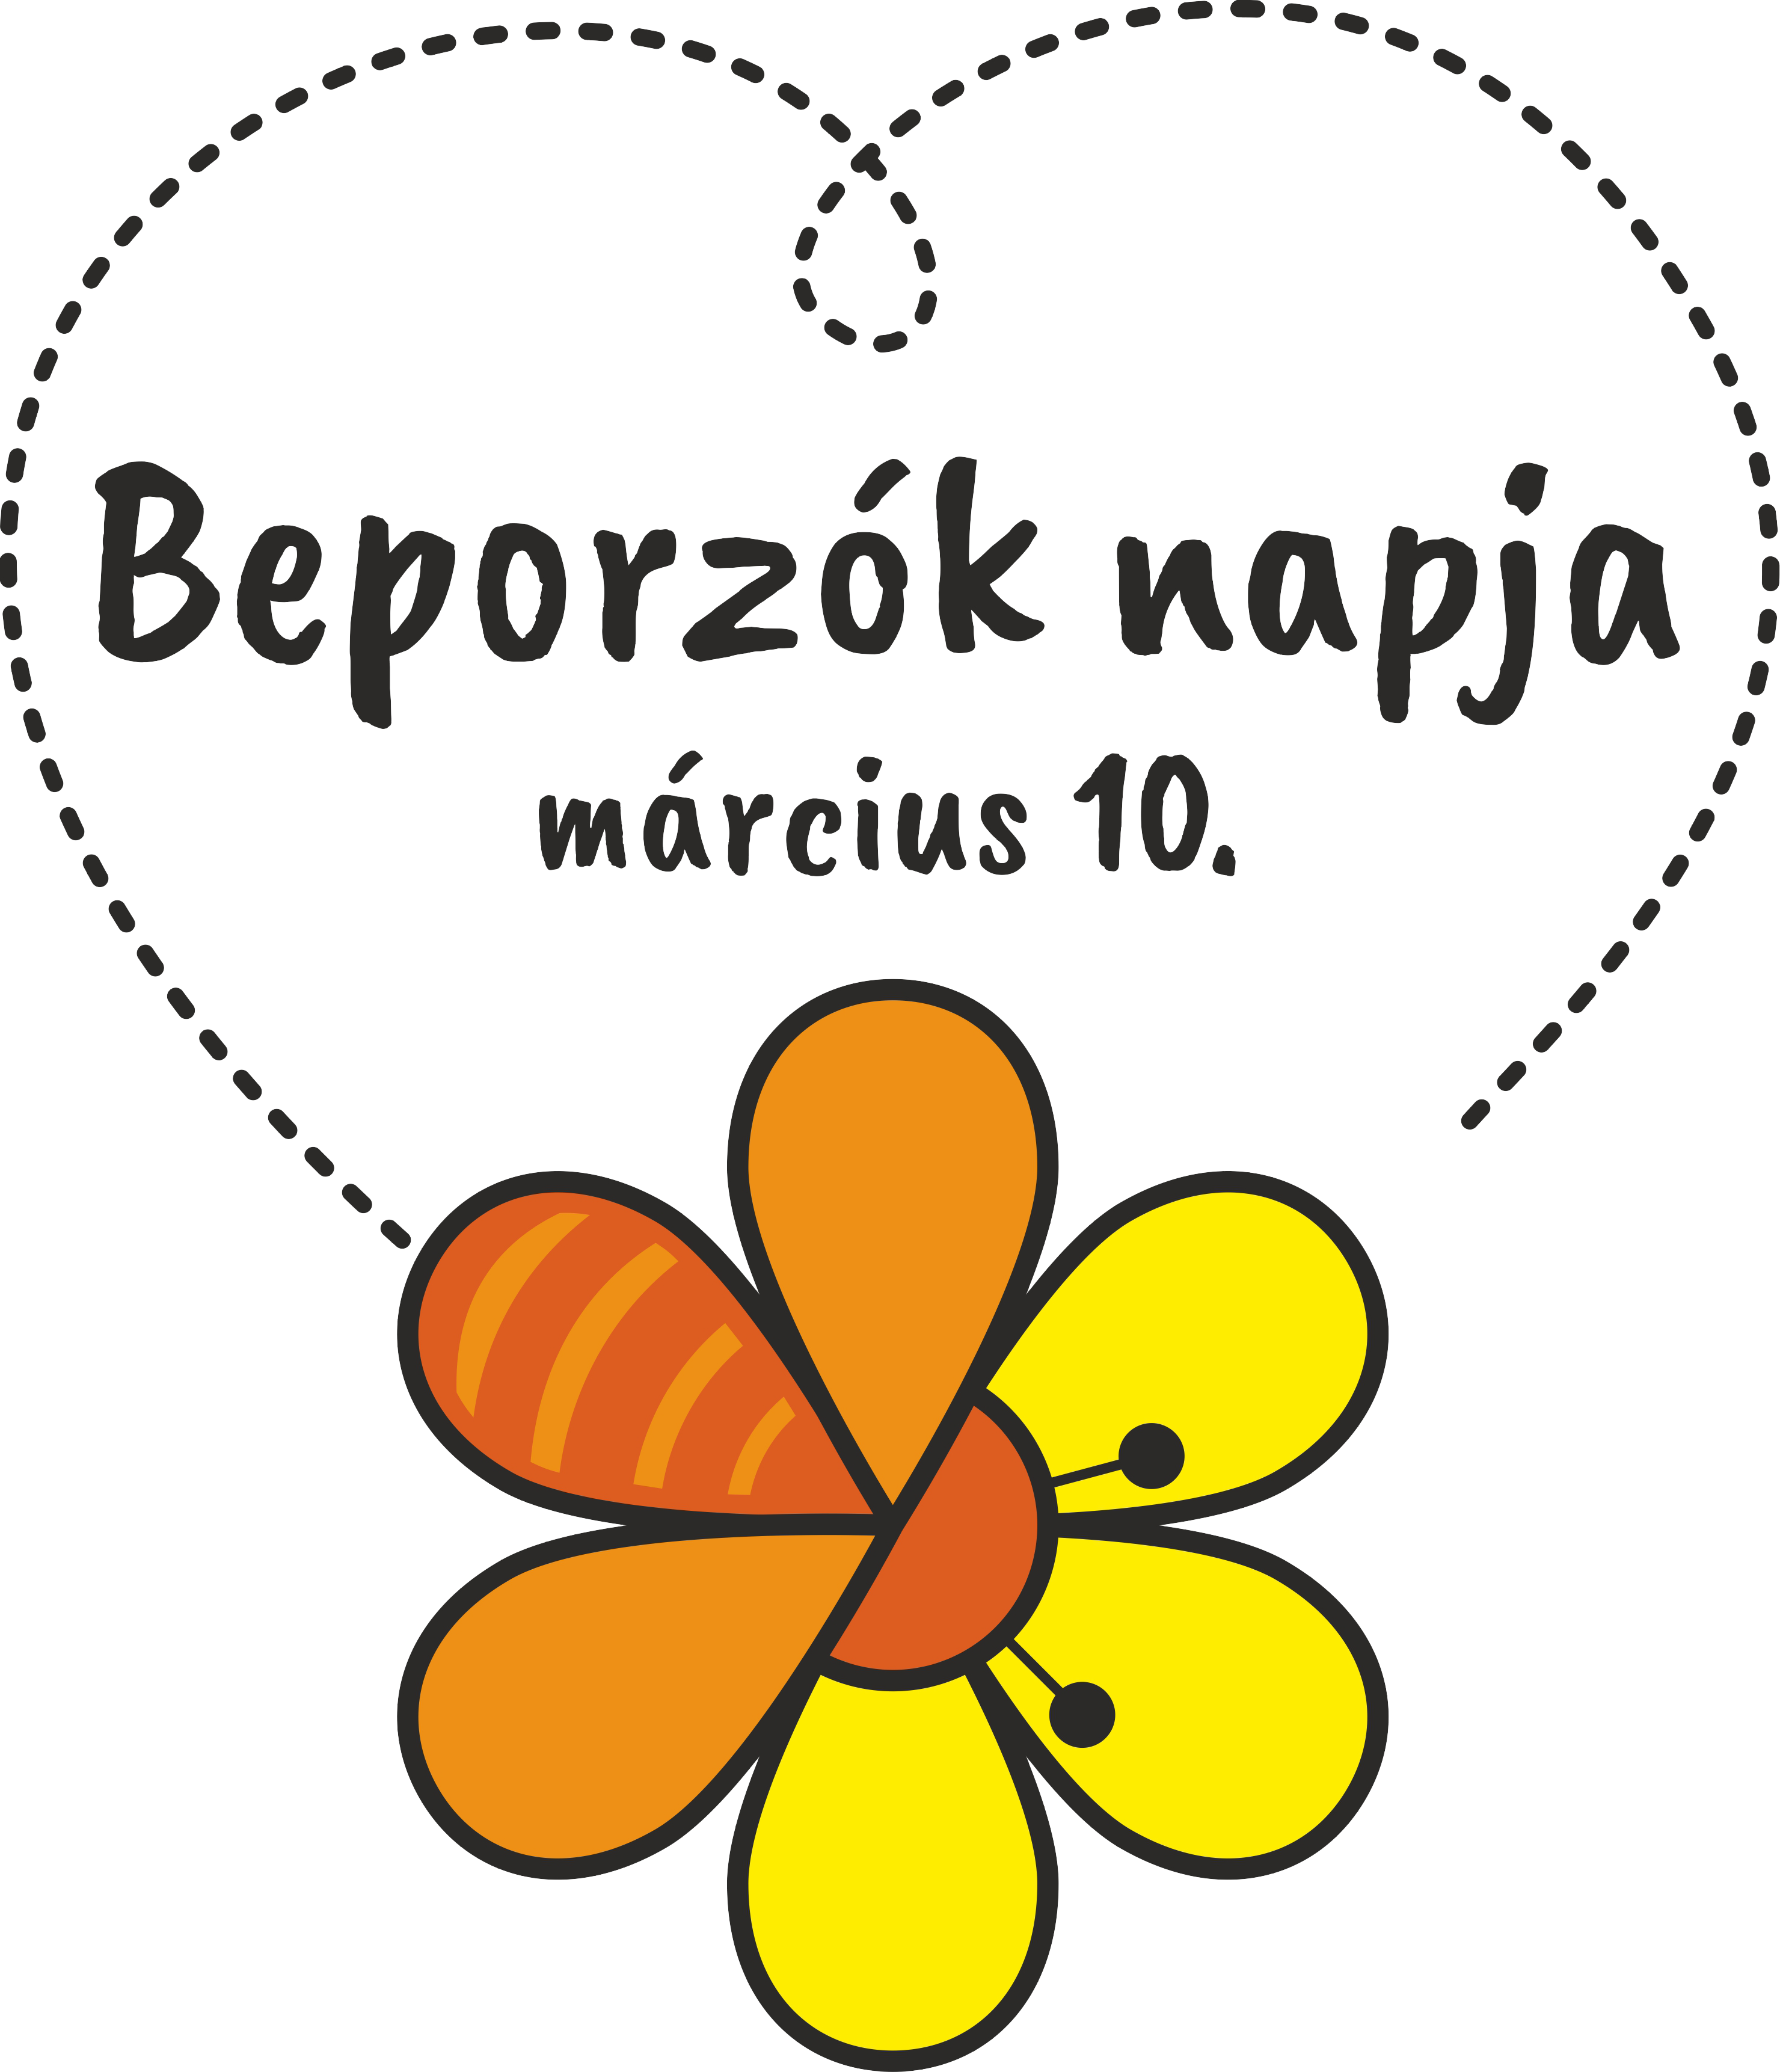 beporzok_napja_logo.png